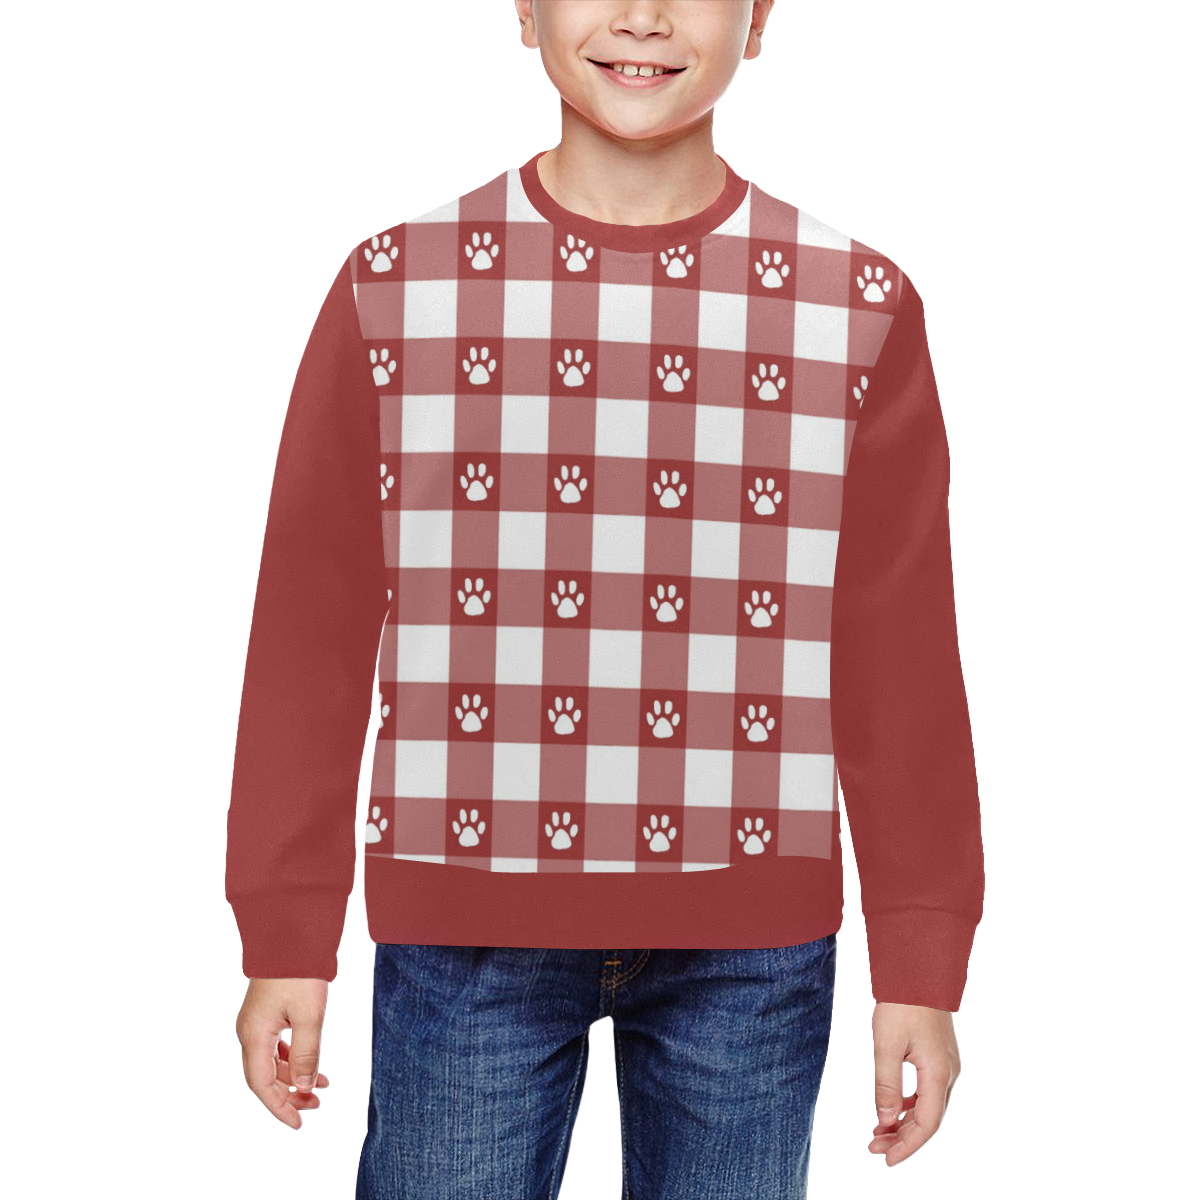 Plaid and paws All Over Print Crewneck Sweatshirt for Kids (Model H29)